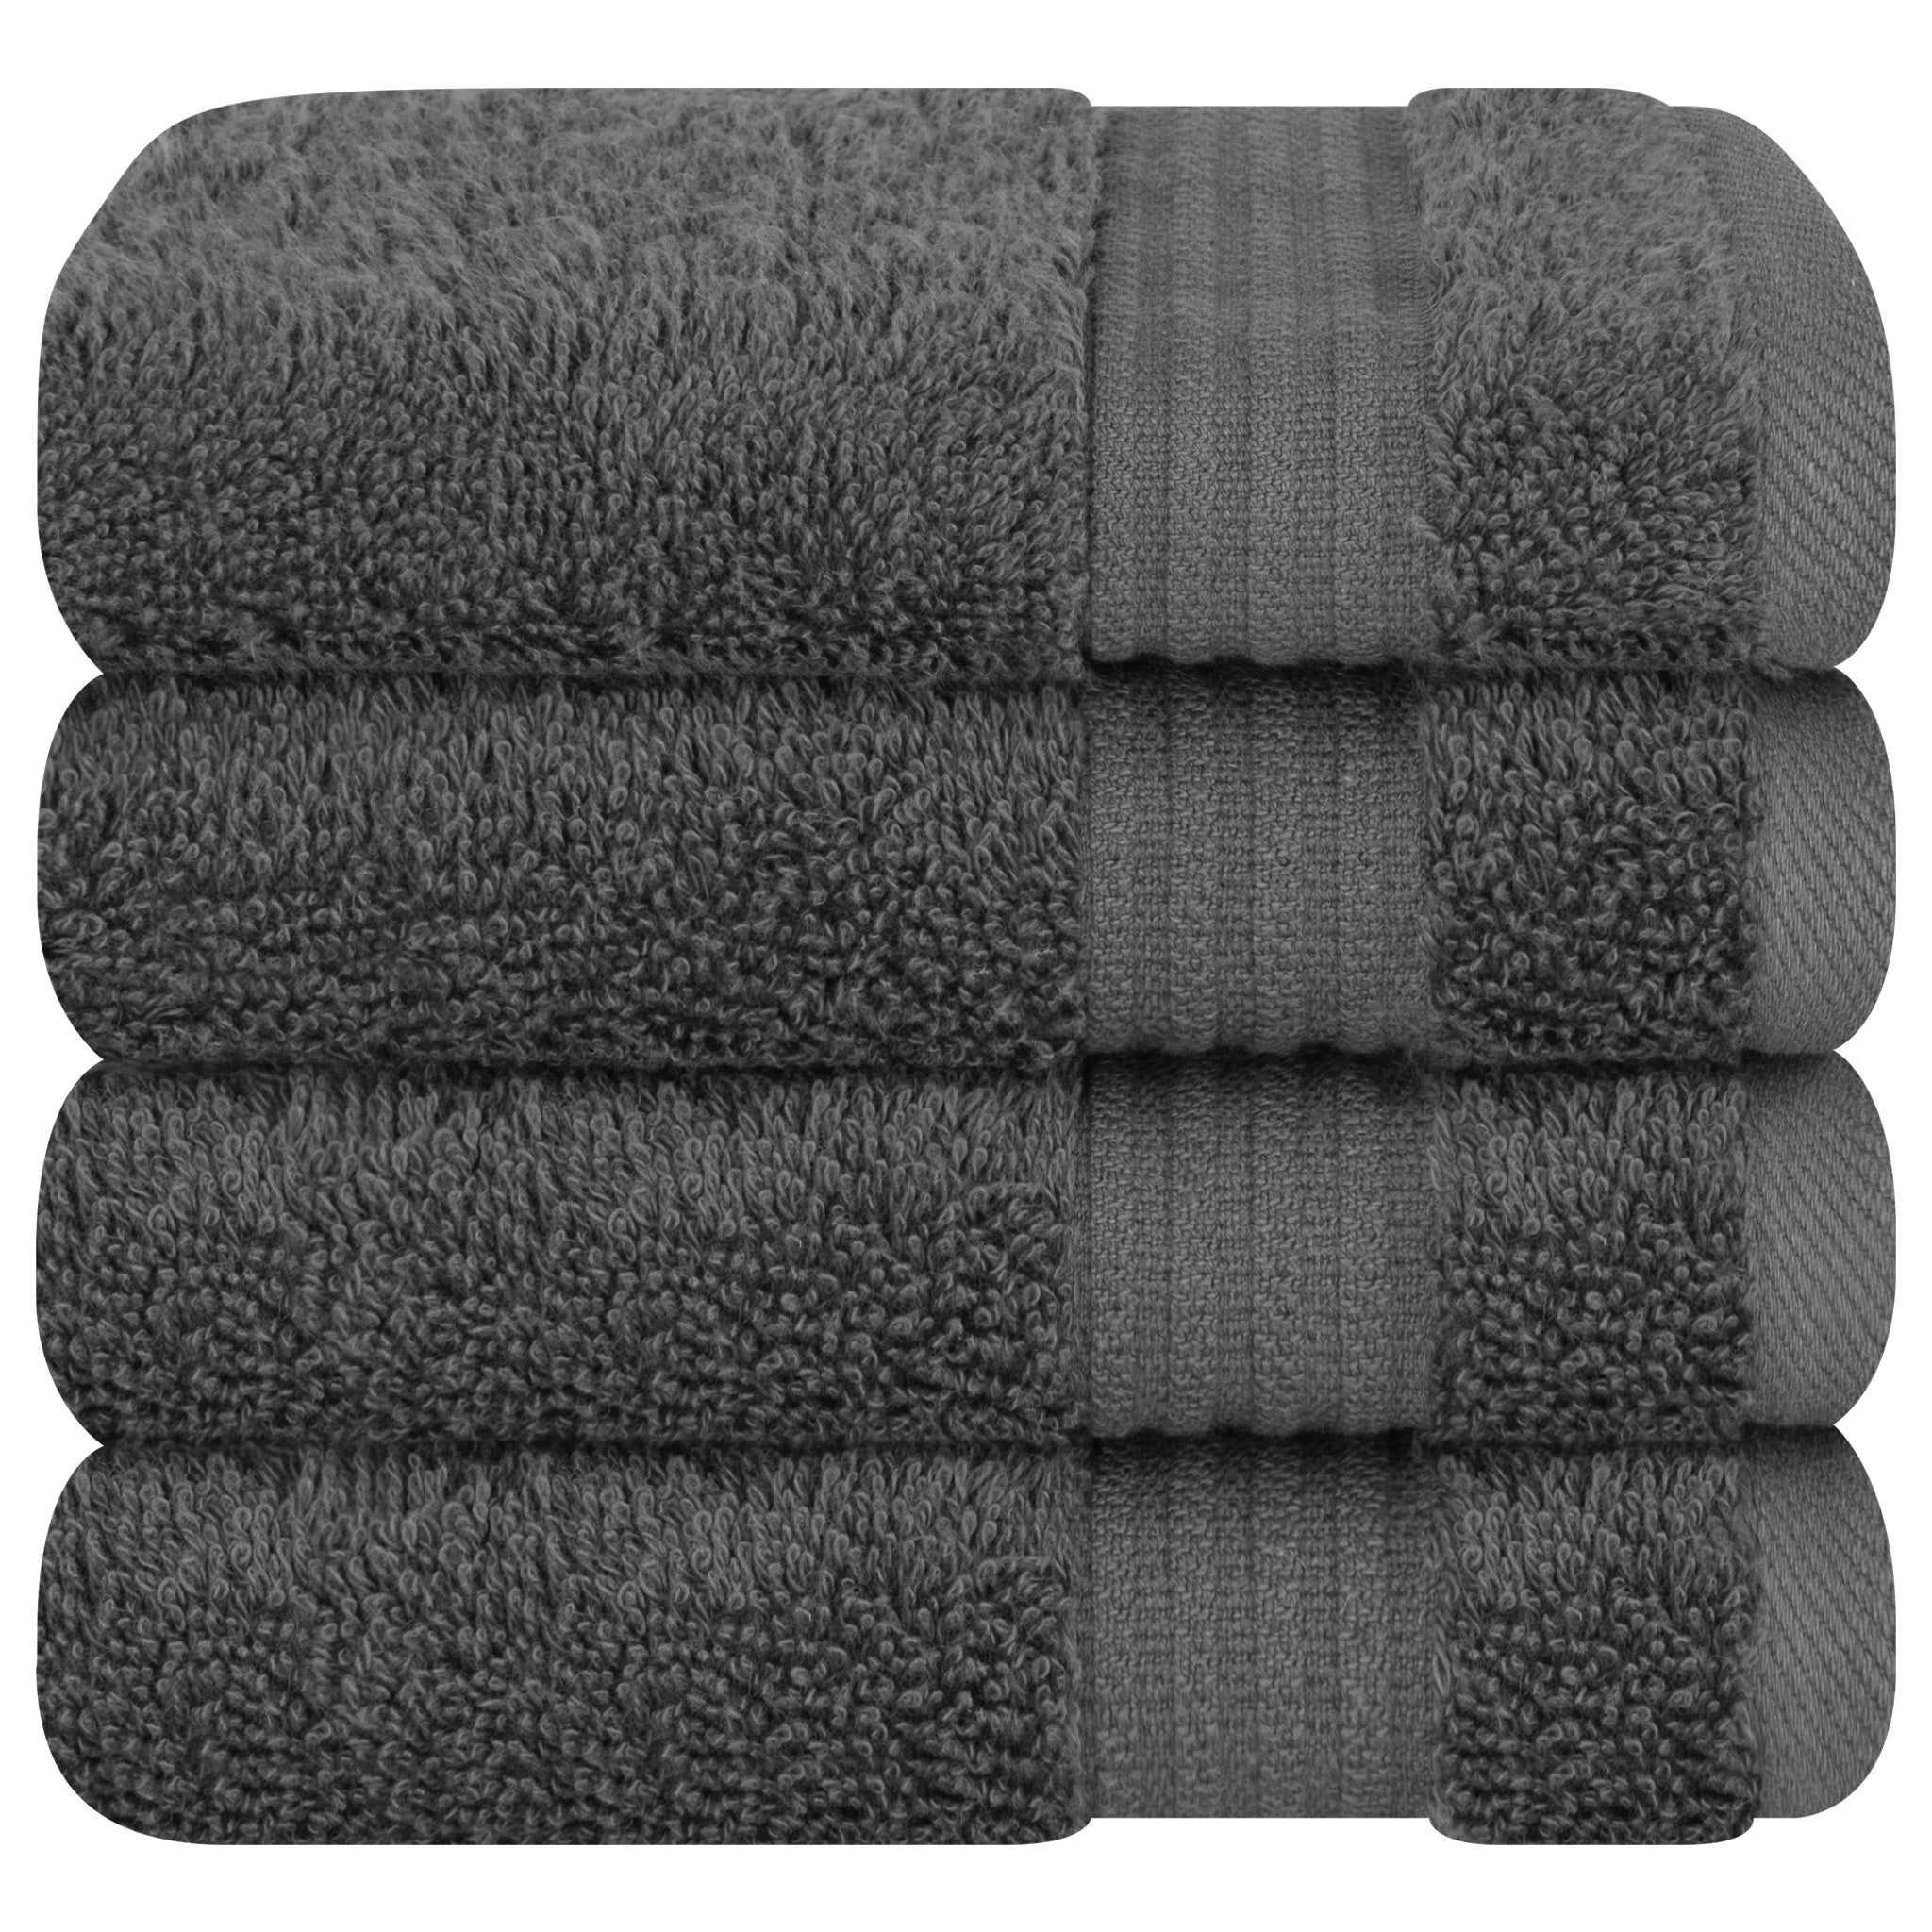 American Soft Linen Bekos 100% Cotton Turkish Towels, 4 Piece Washcloth Towel Set -gray-05